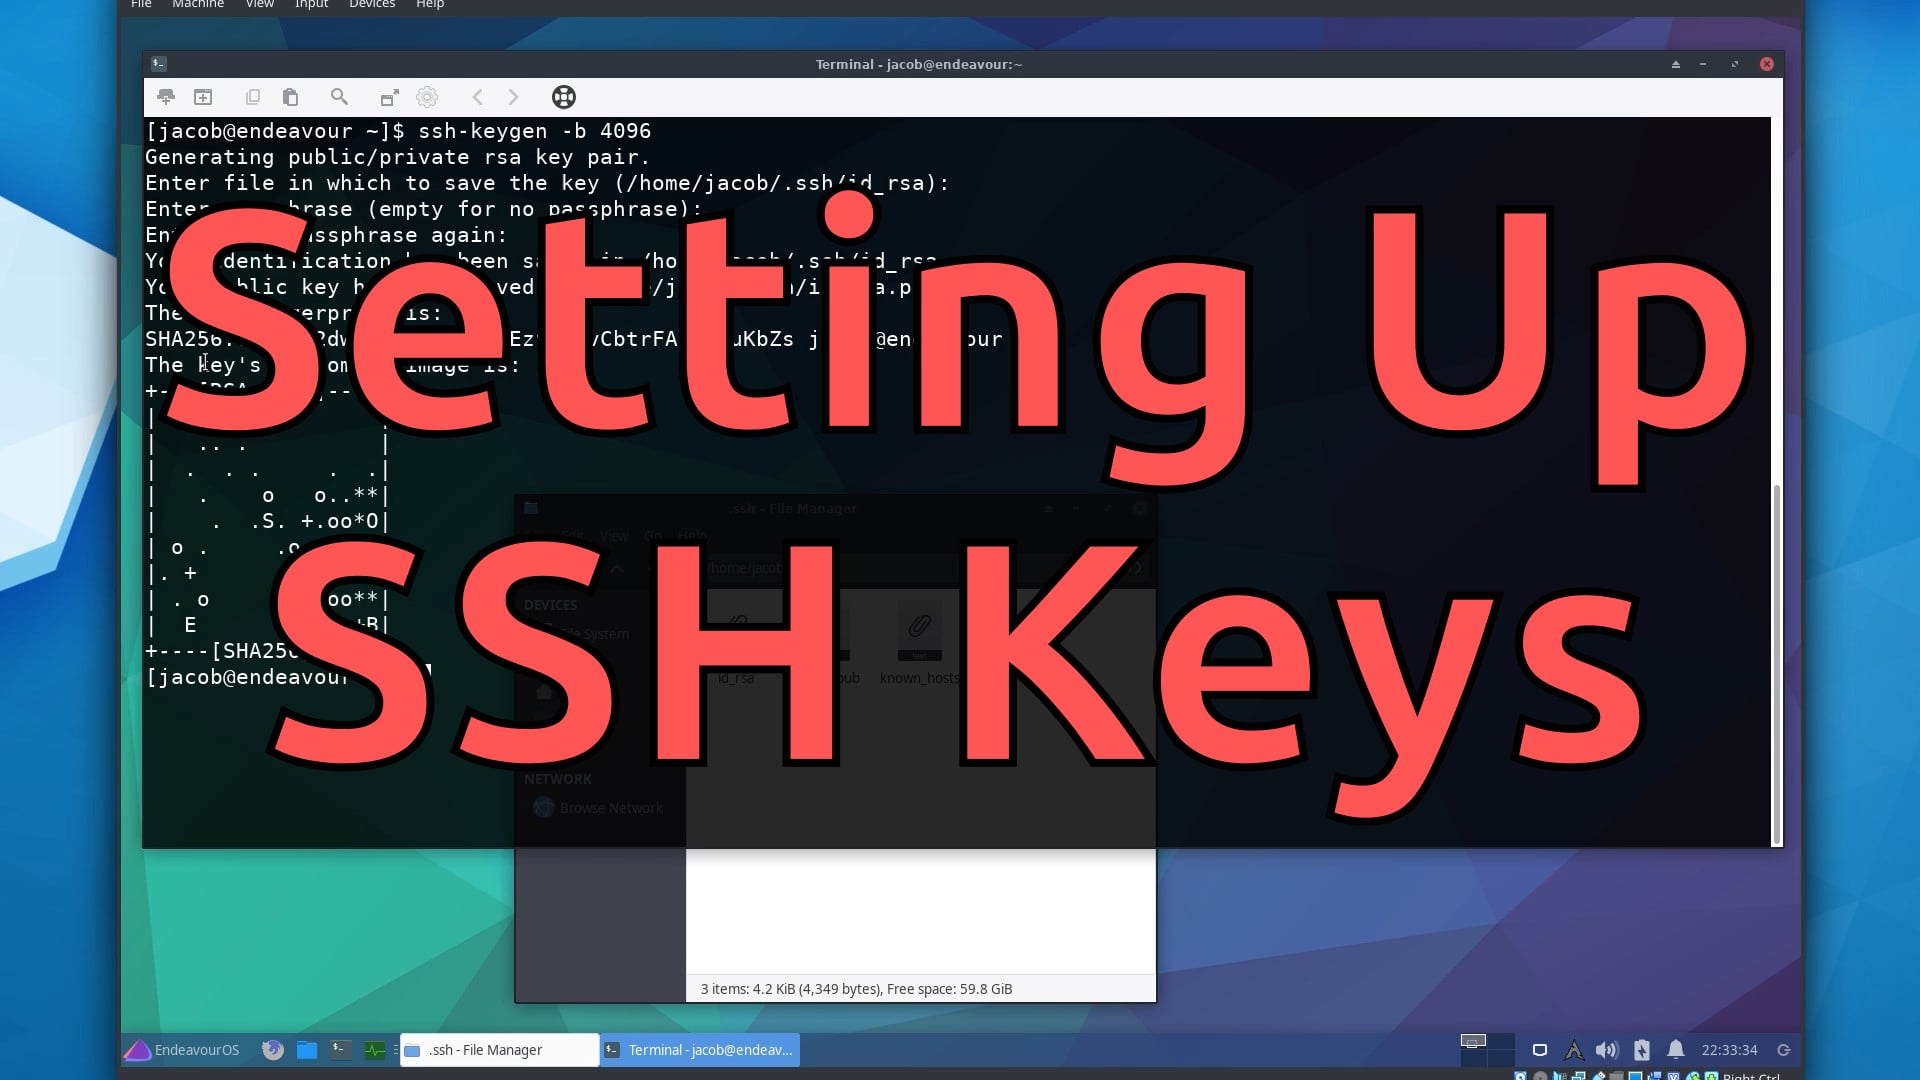 Setting Up SSH Keys